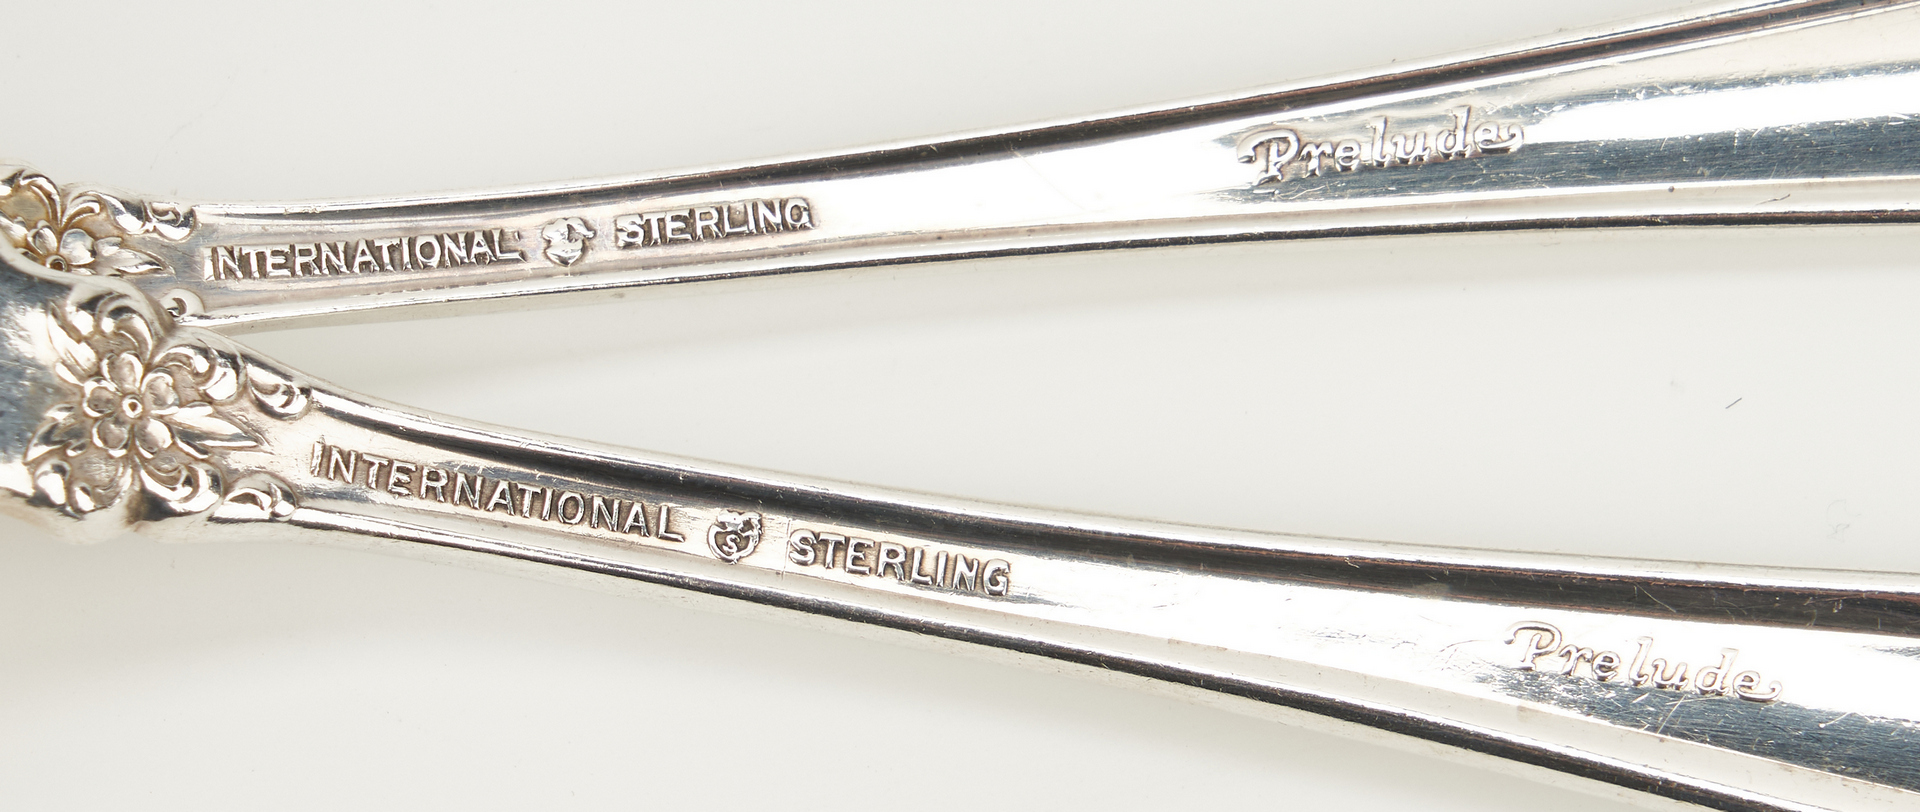 Lot 456: 69 pcs. International Prelude Sterling Silver